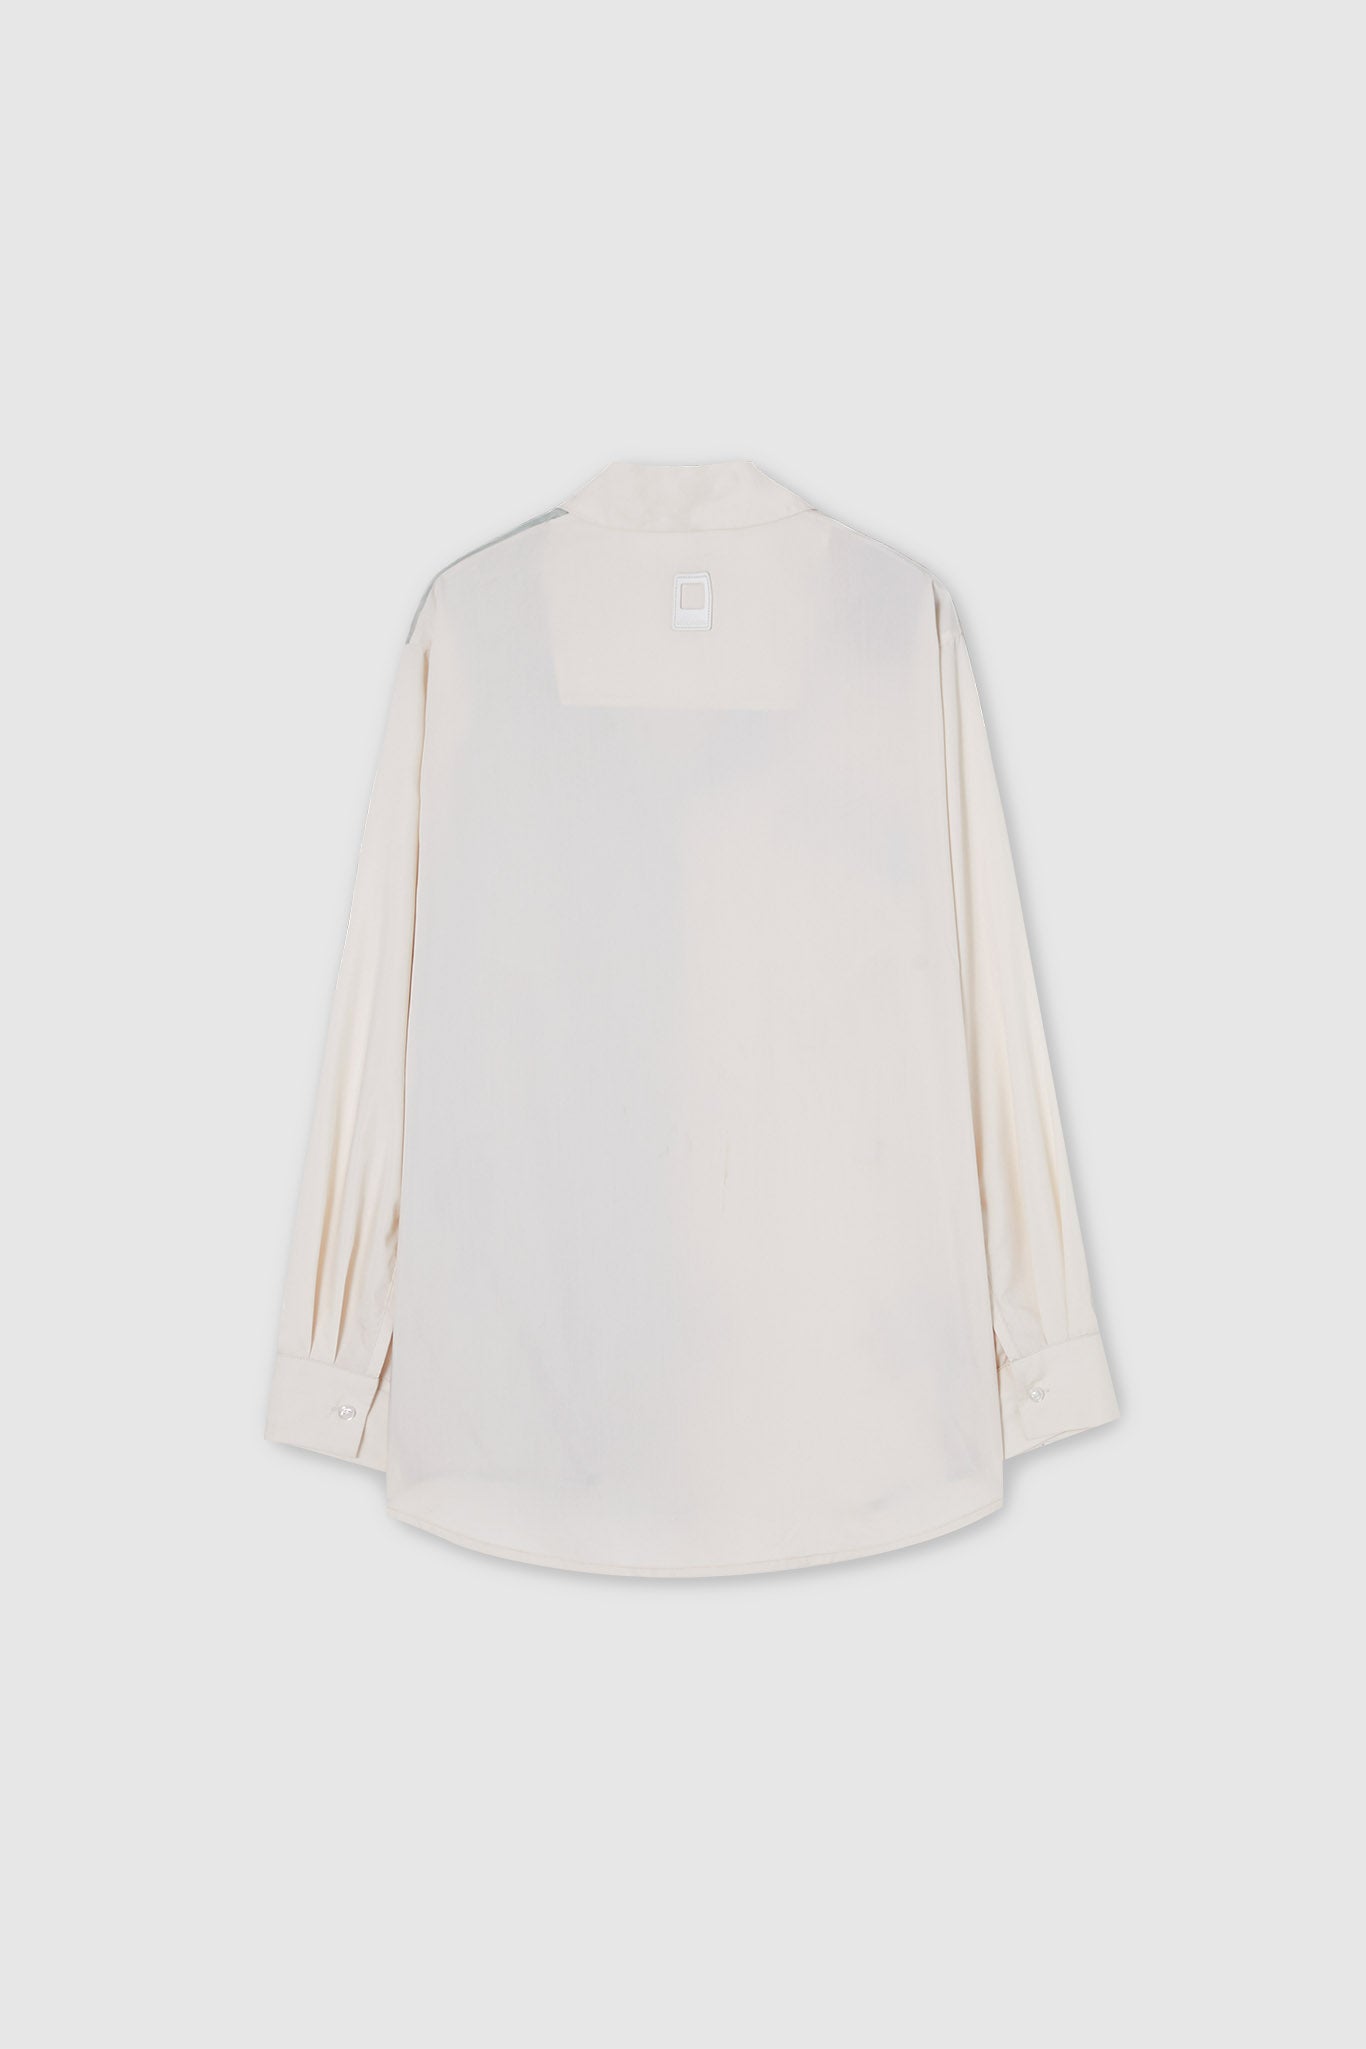 Design printed shirt jacket / A